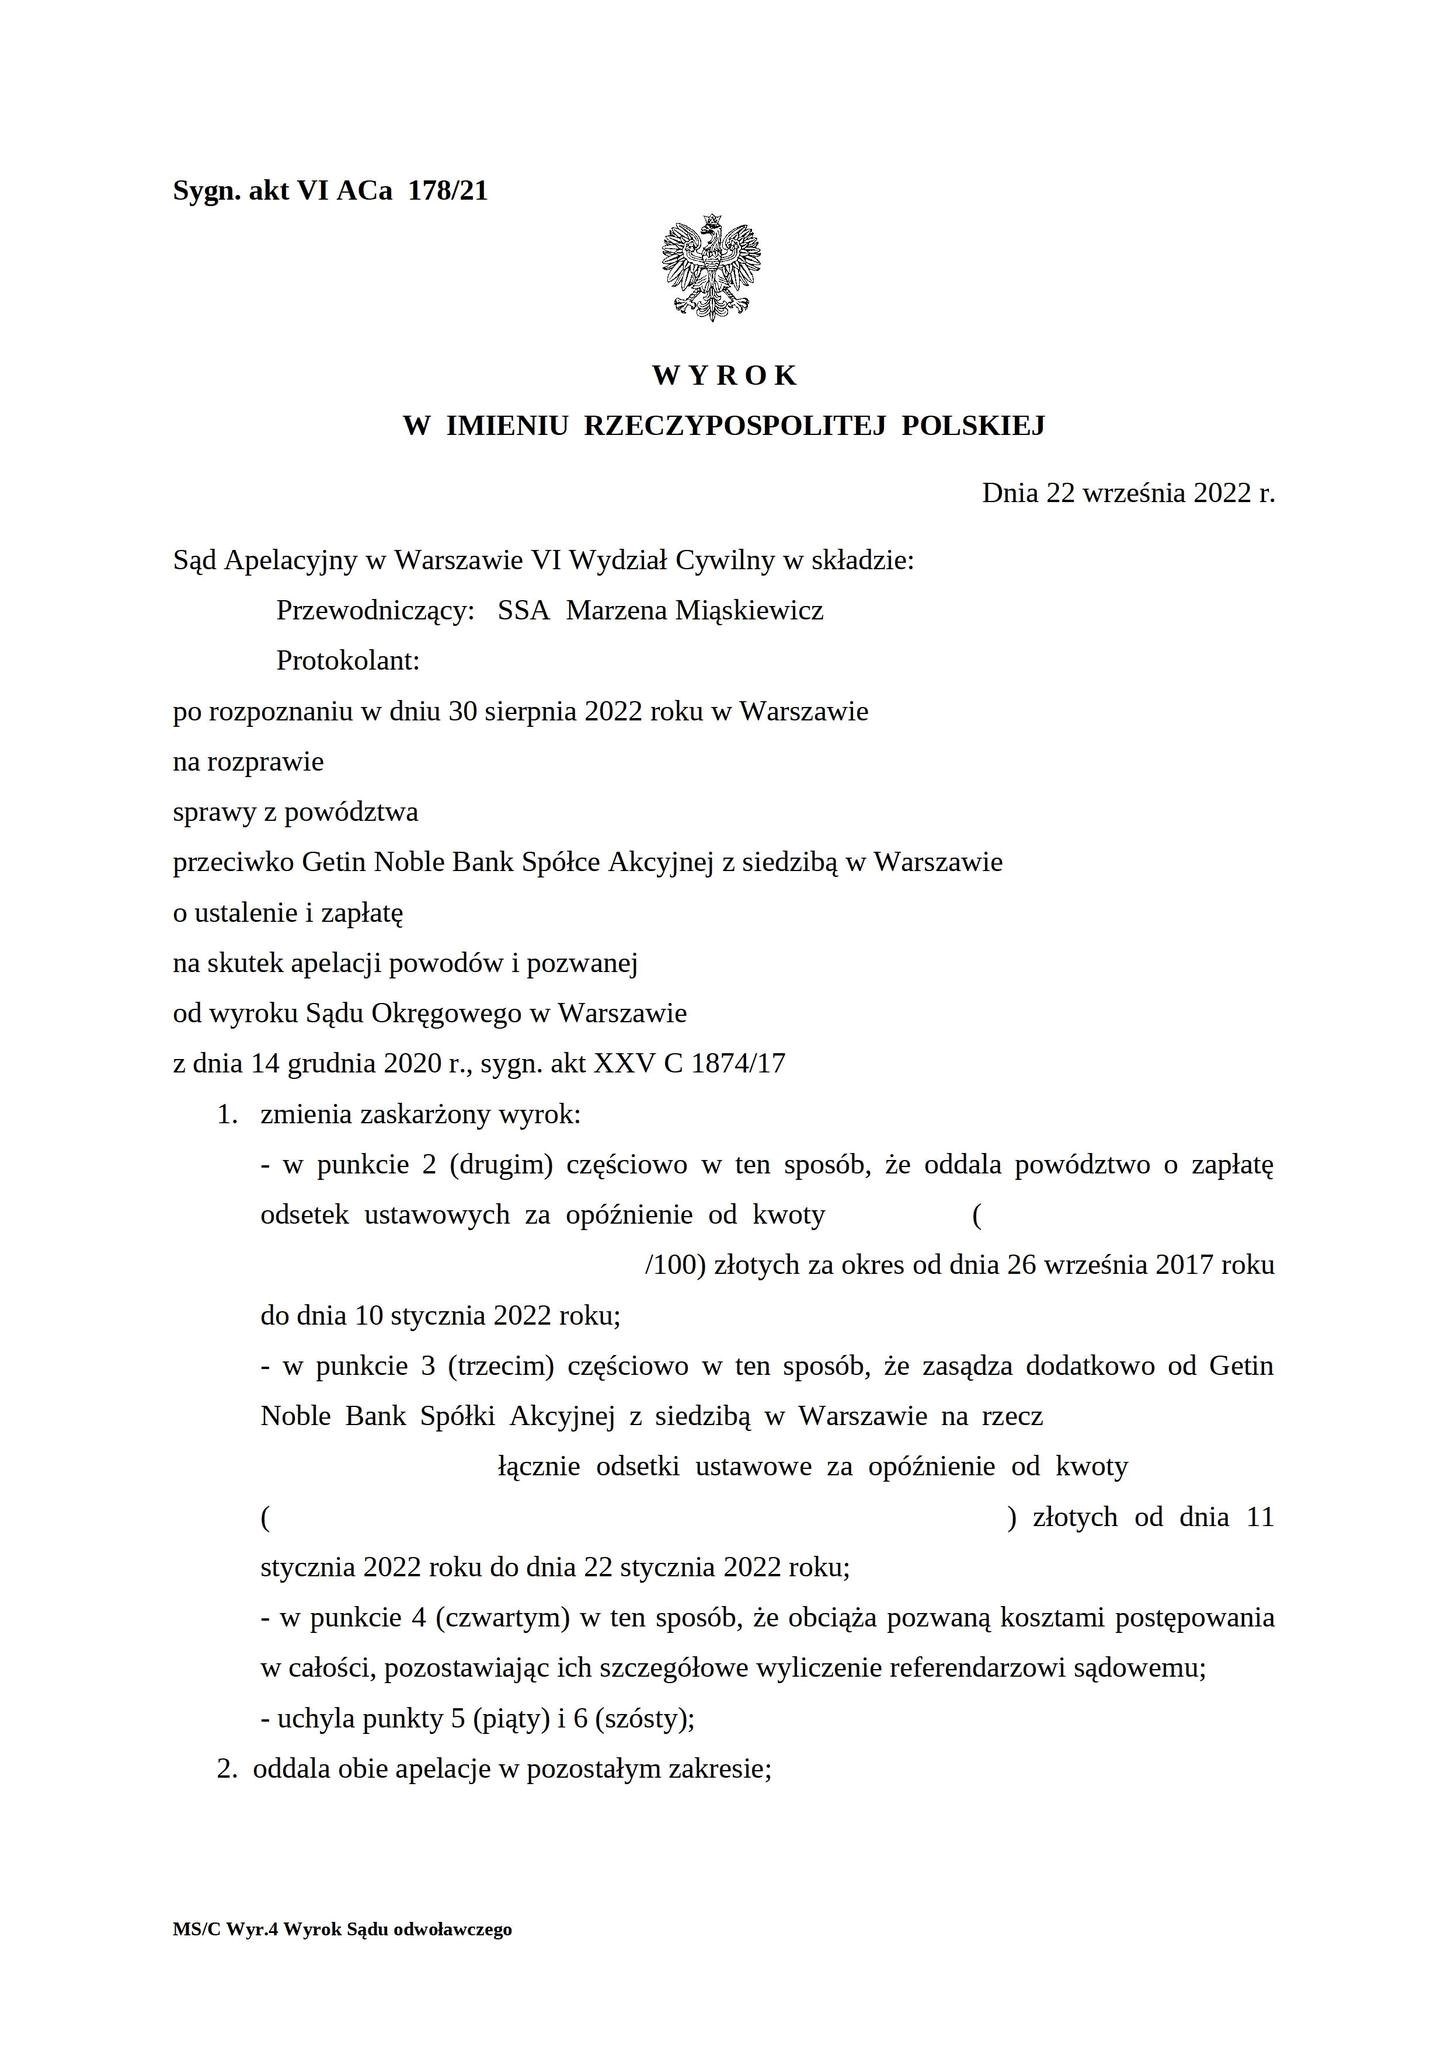 Wyrok Sądu Apelacyjnego z dnia 22.09.2022 r., sygn. akt VI ACa 178/21